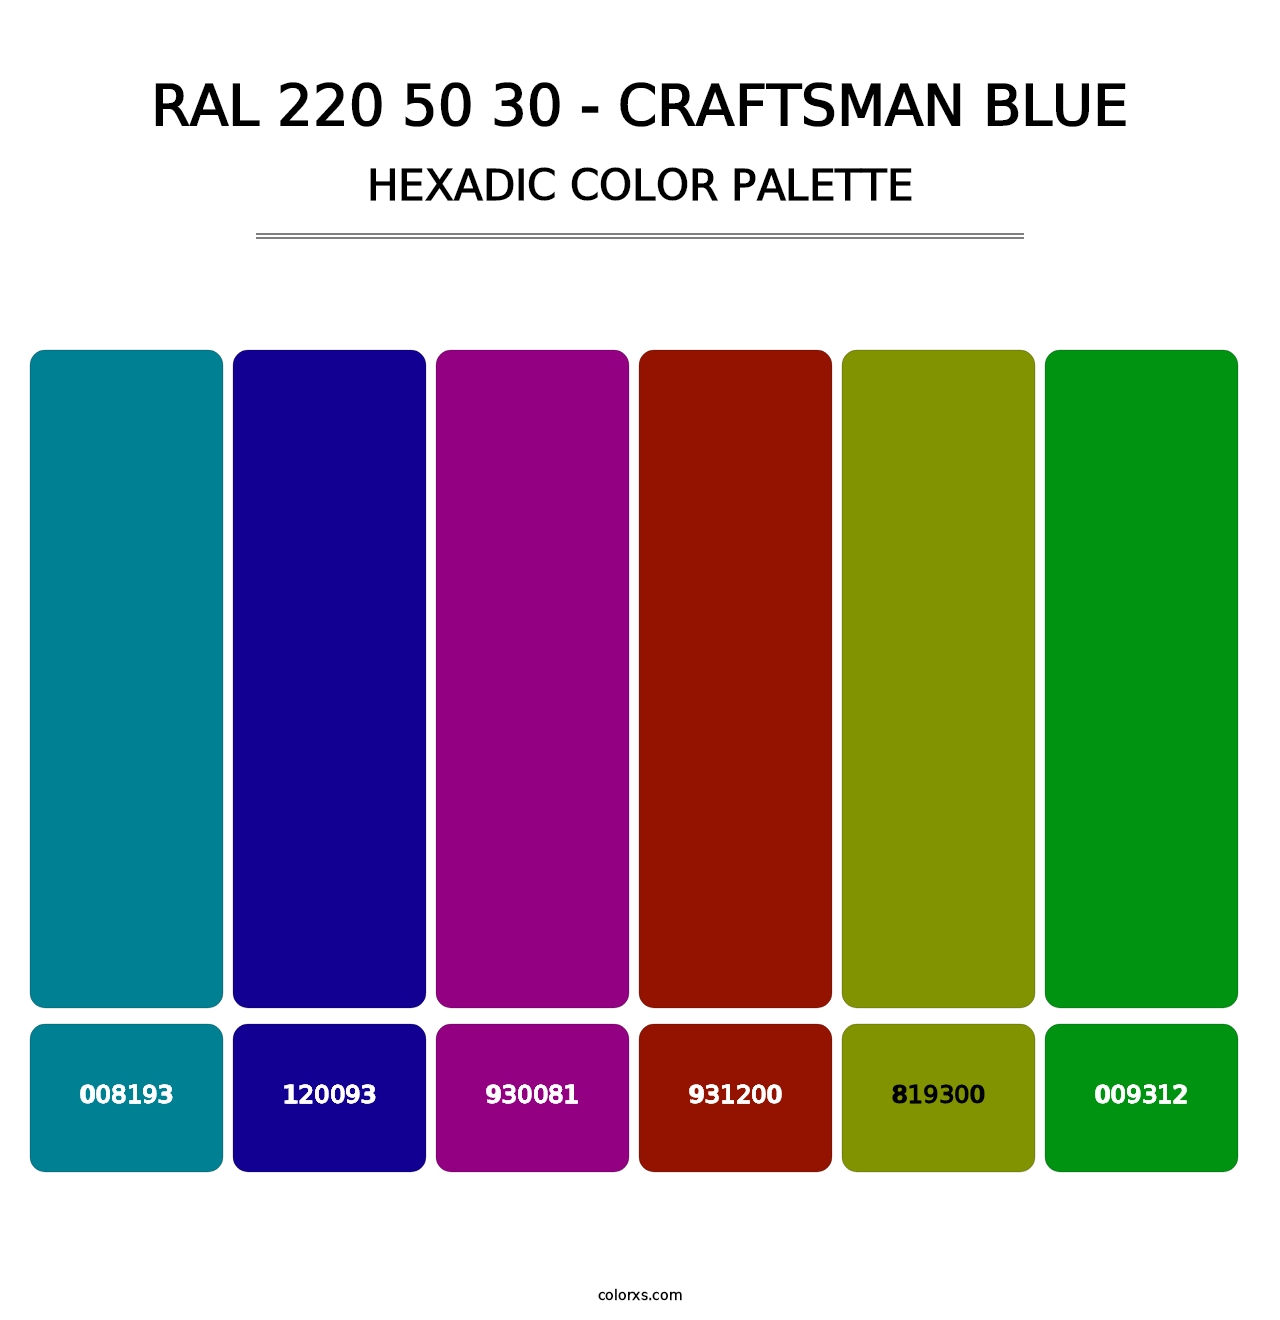 RAL 220 50 30 - Craftsman Blue - Hexadic Color Palette